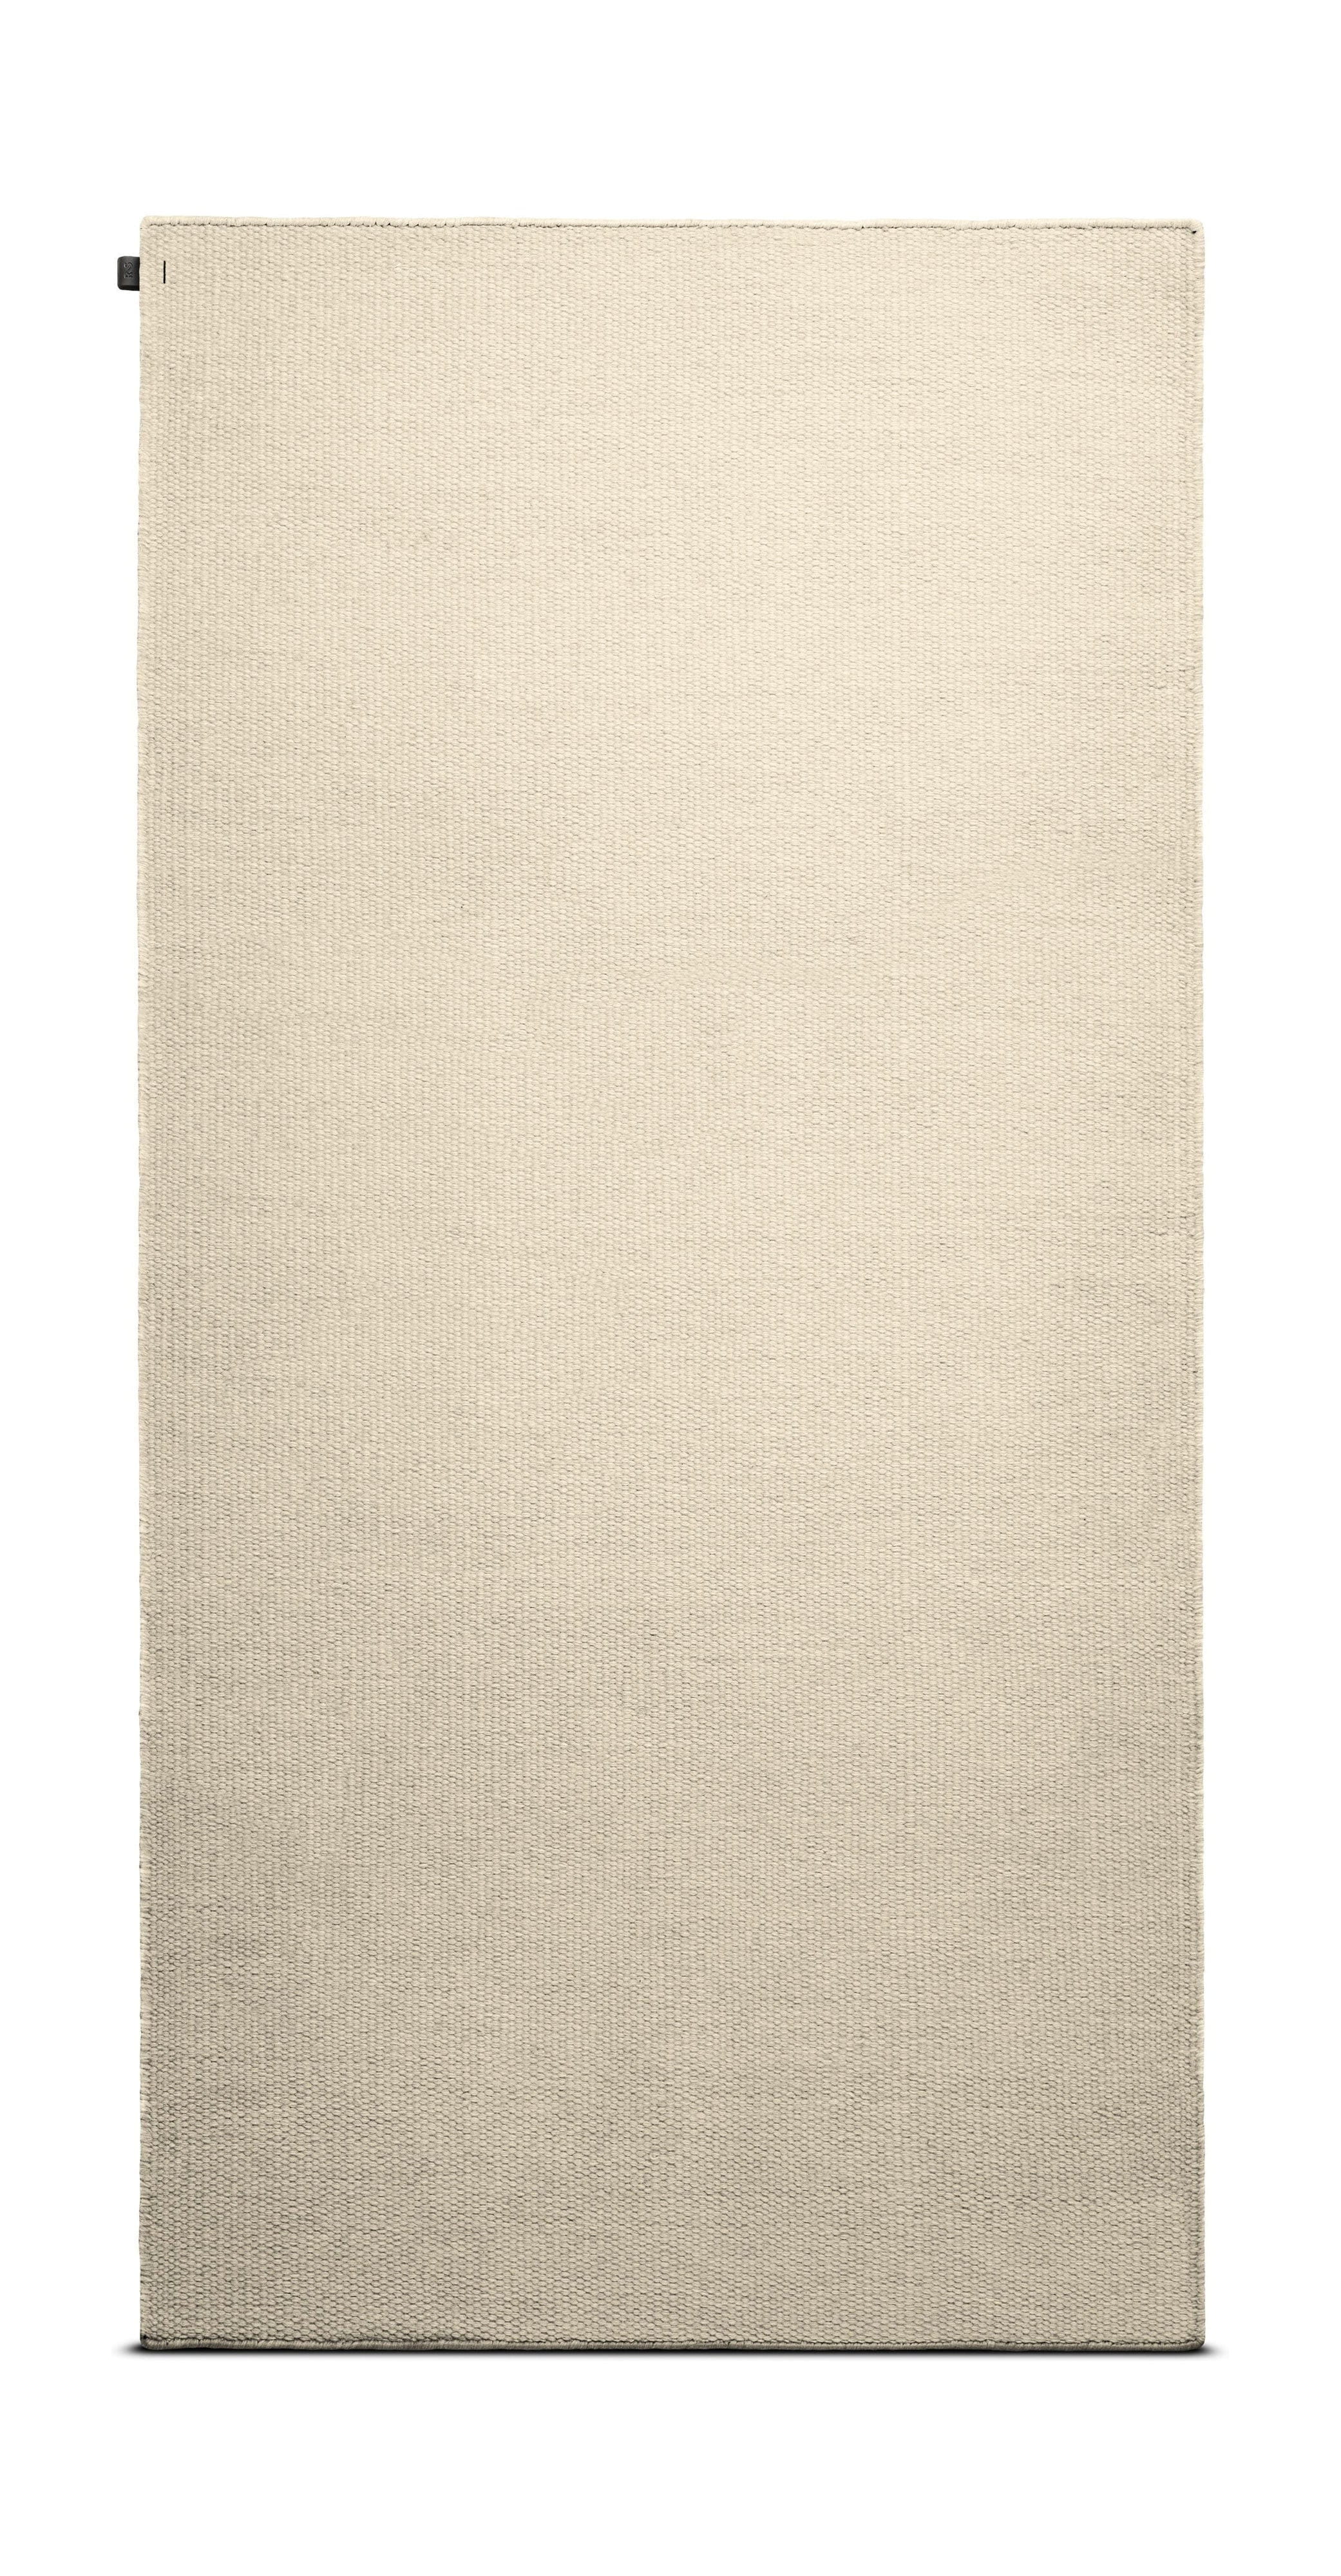 Rug Solid Huisdier tapijt 140 x 200 cm, latte